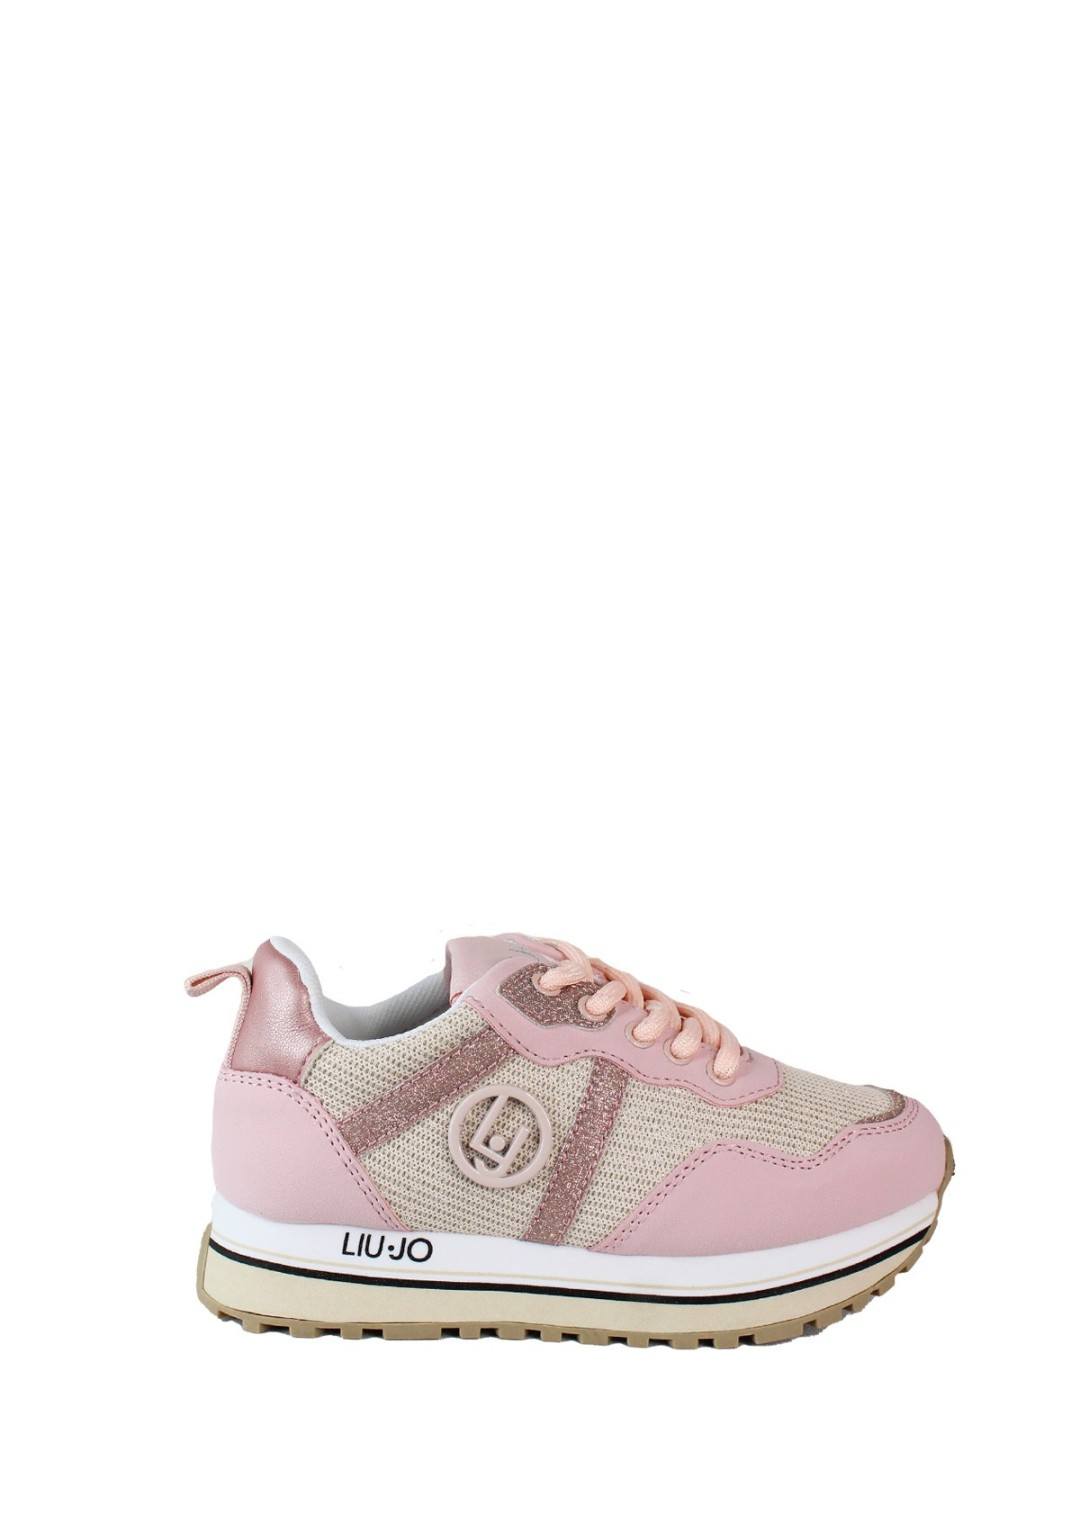 LIU JO - Sneaker Lamè - Bambine e ragazze - 4A3315